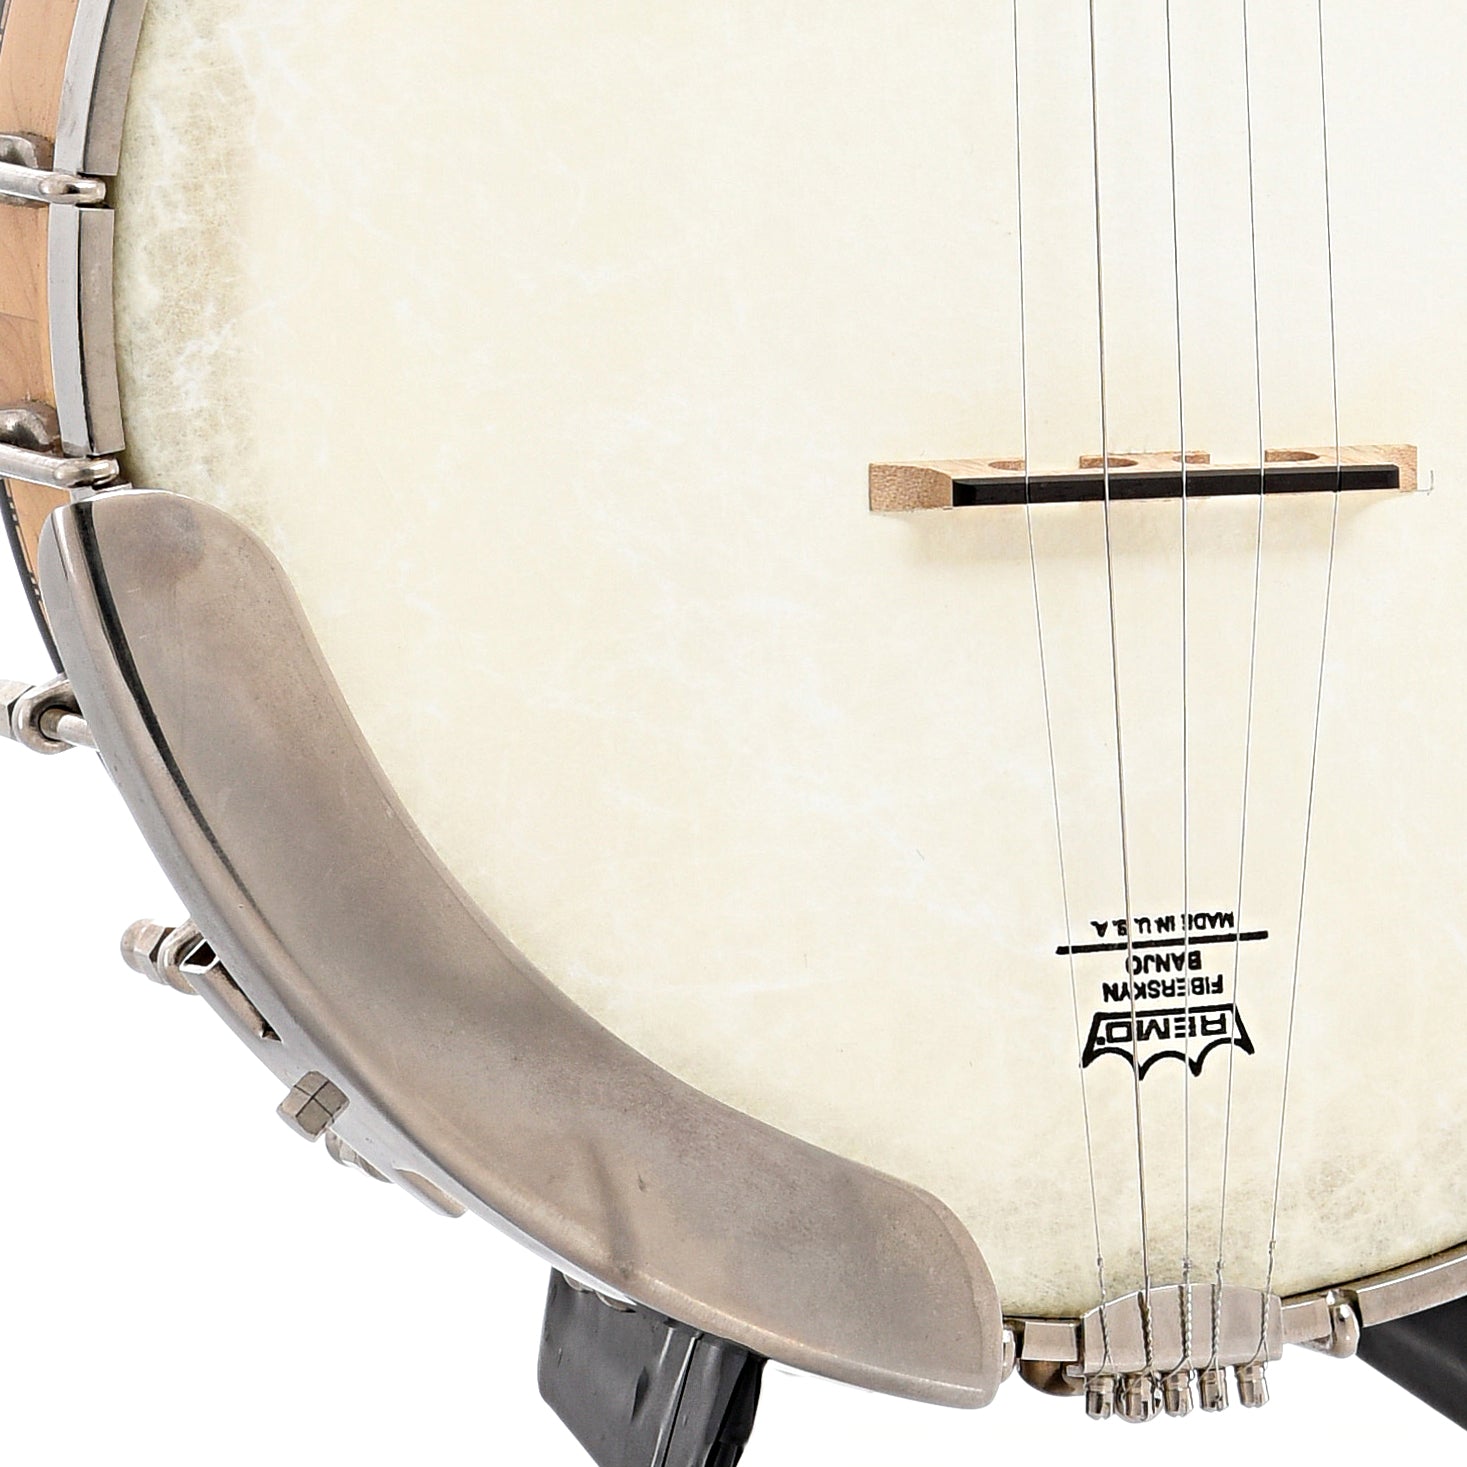 Tailpiece, bridge and armrest of Wildwood Artist Open Back Banjo (c.1990)